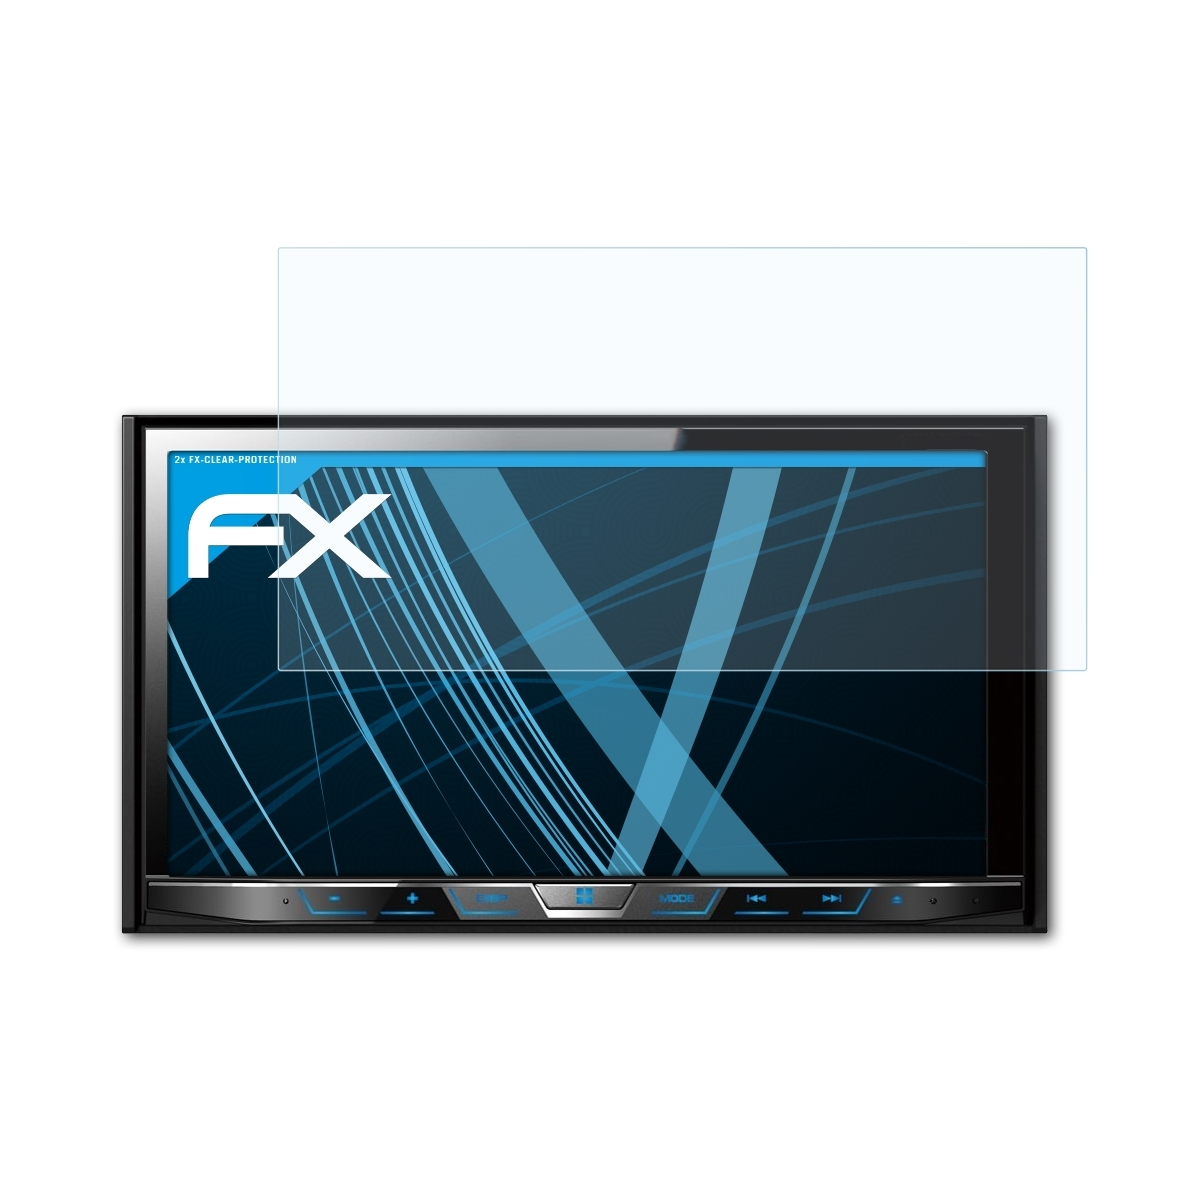 ATFOLIX 2x FX-Clear Displayschutz(für Pioneer / X5800DAB) AVH-X5700DAB